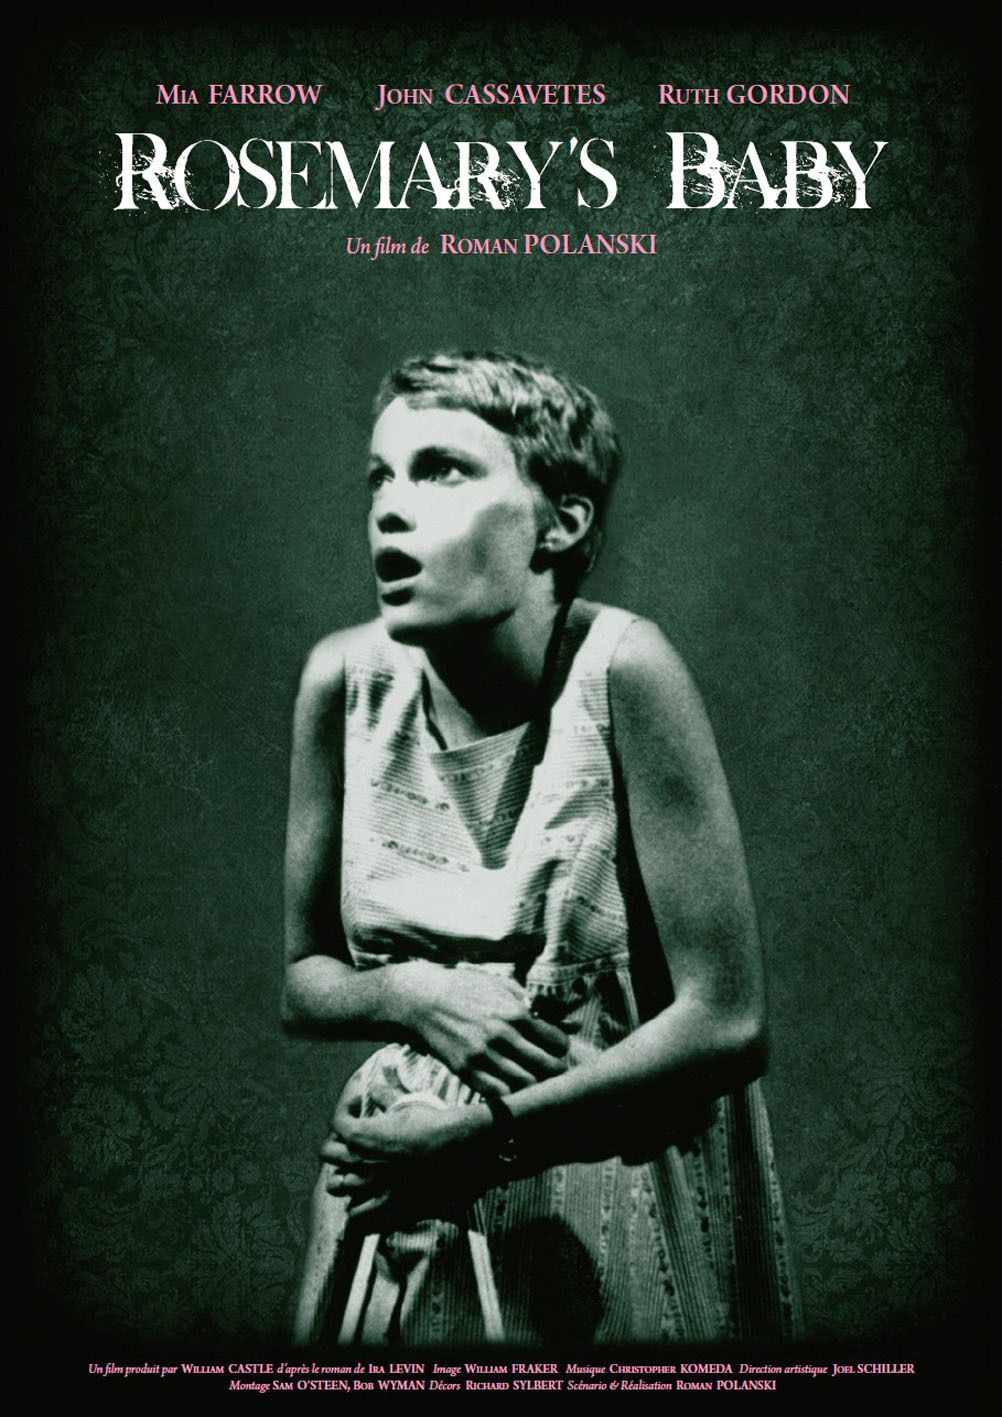 Rosemary's Baby (1968)-Horror movies according to IMDB Ratings